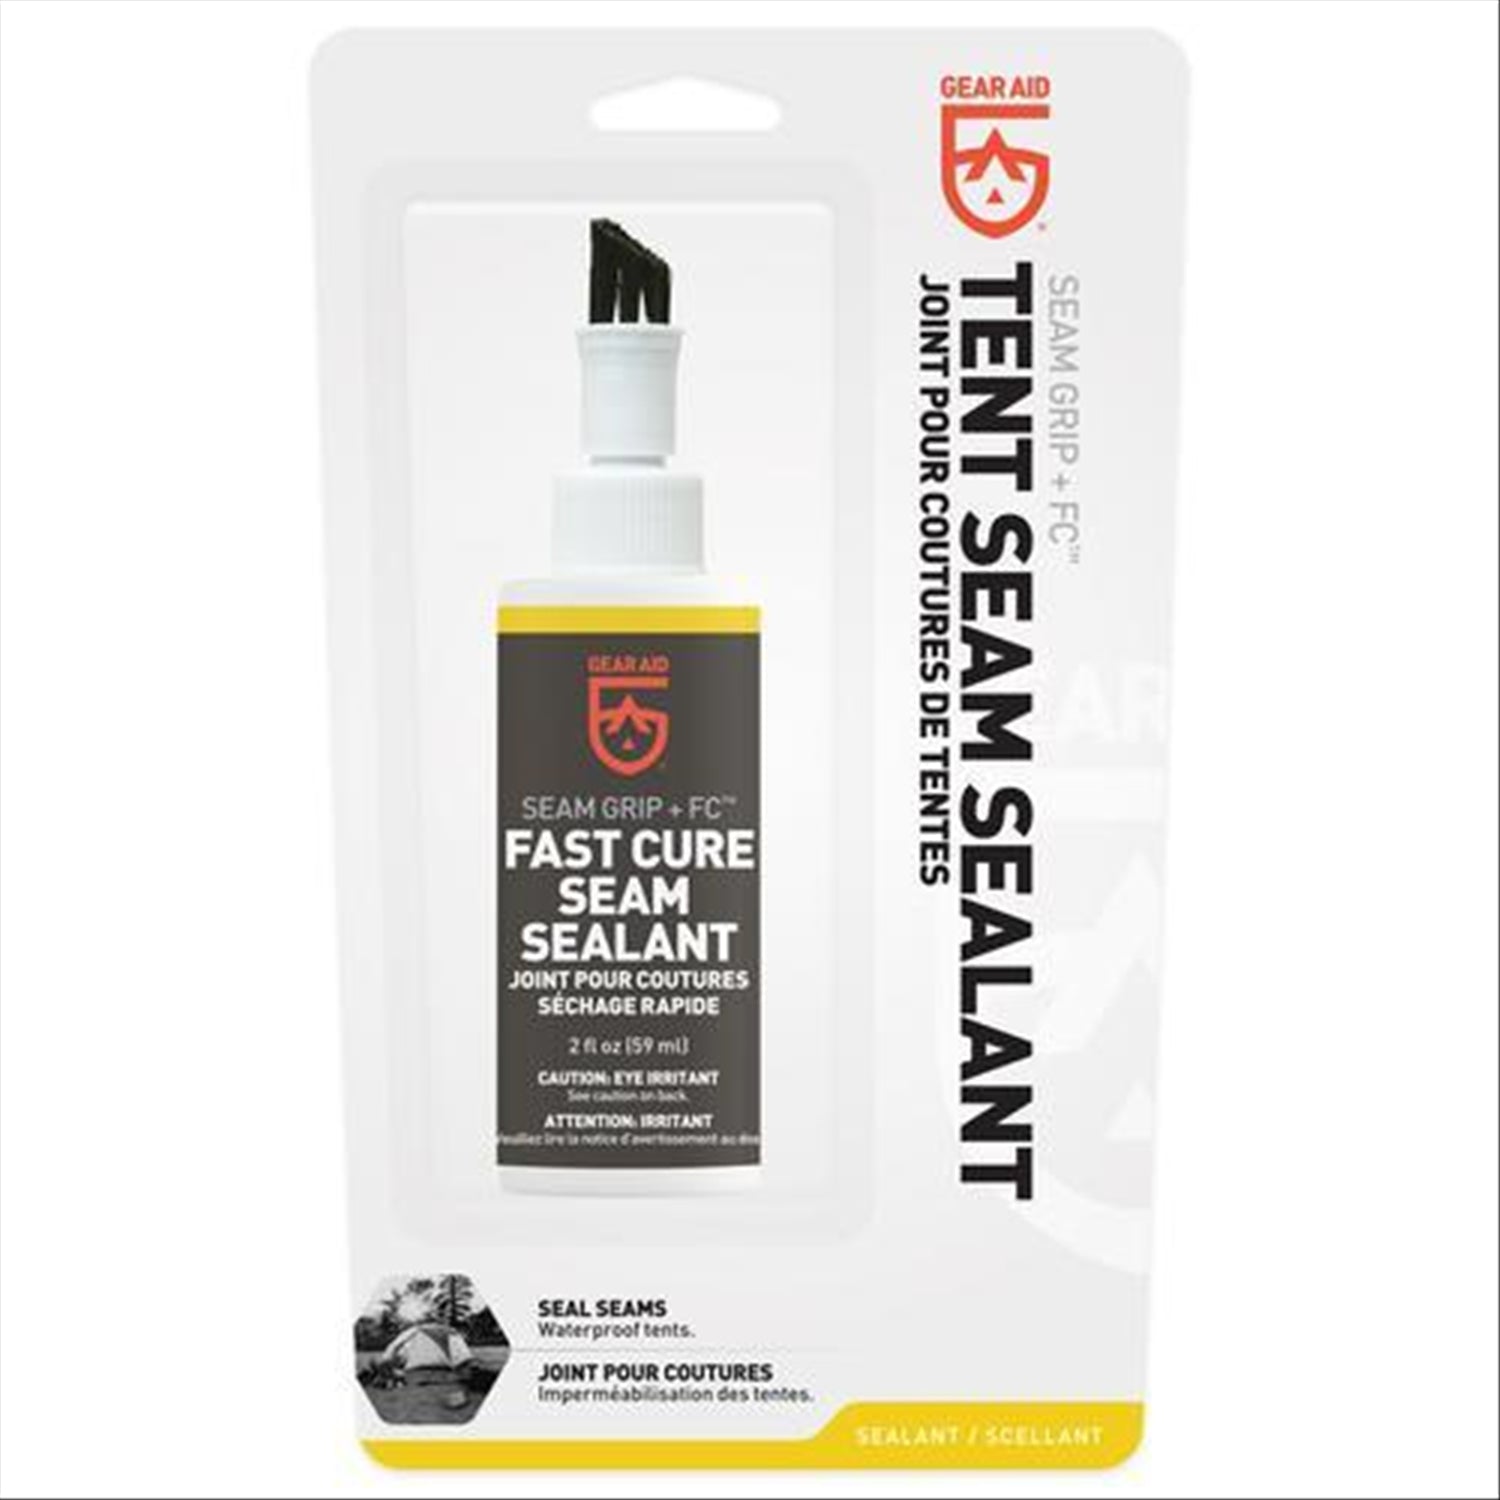 Gear Aid Gear Aid Seam Grip + FC Tent Seam Sealant for PU Coated Fabrics